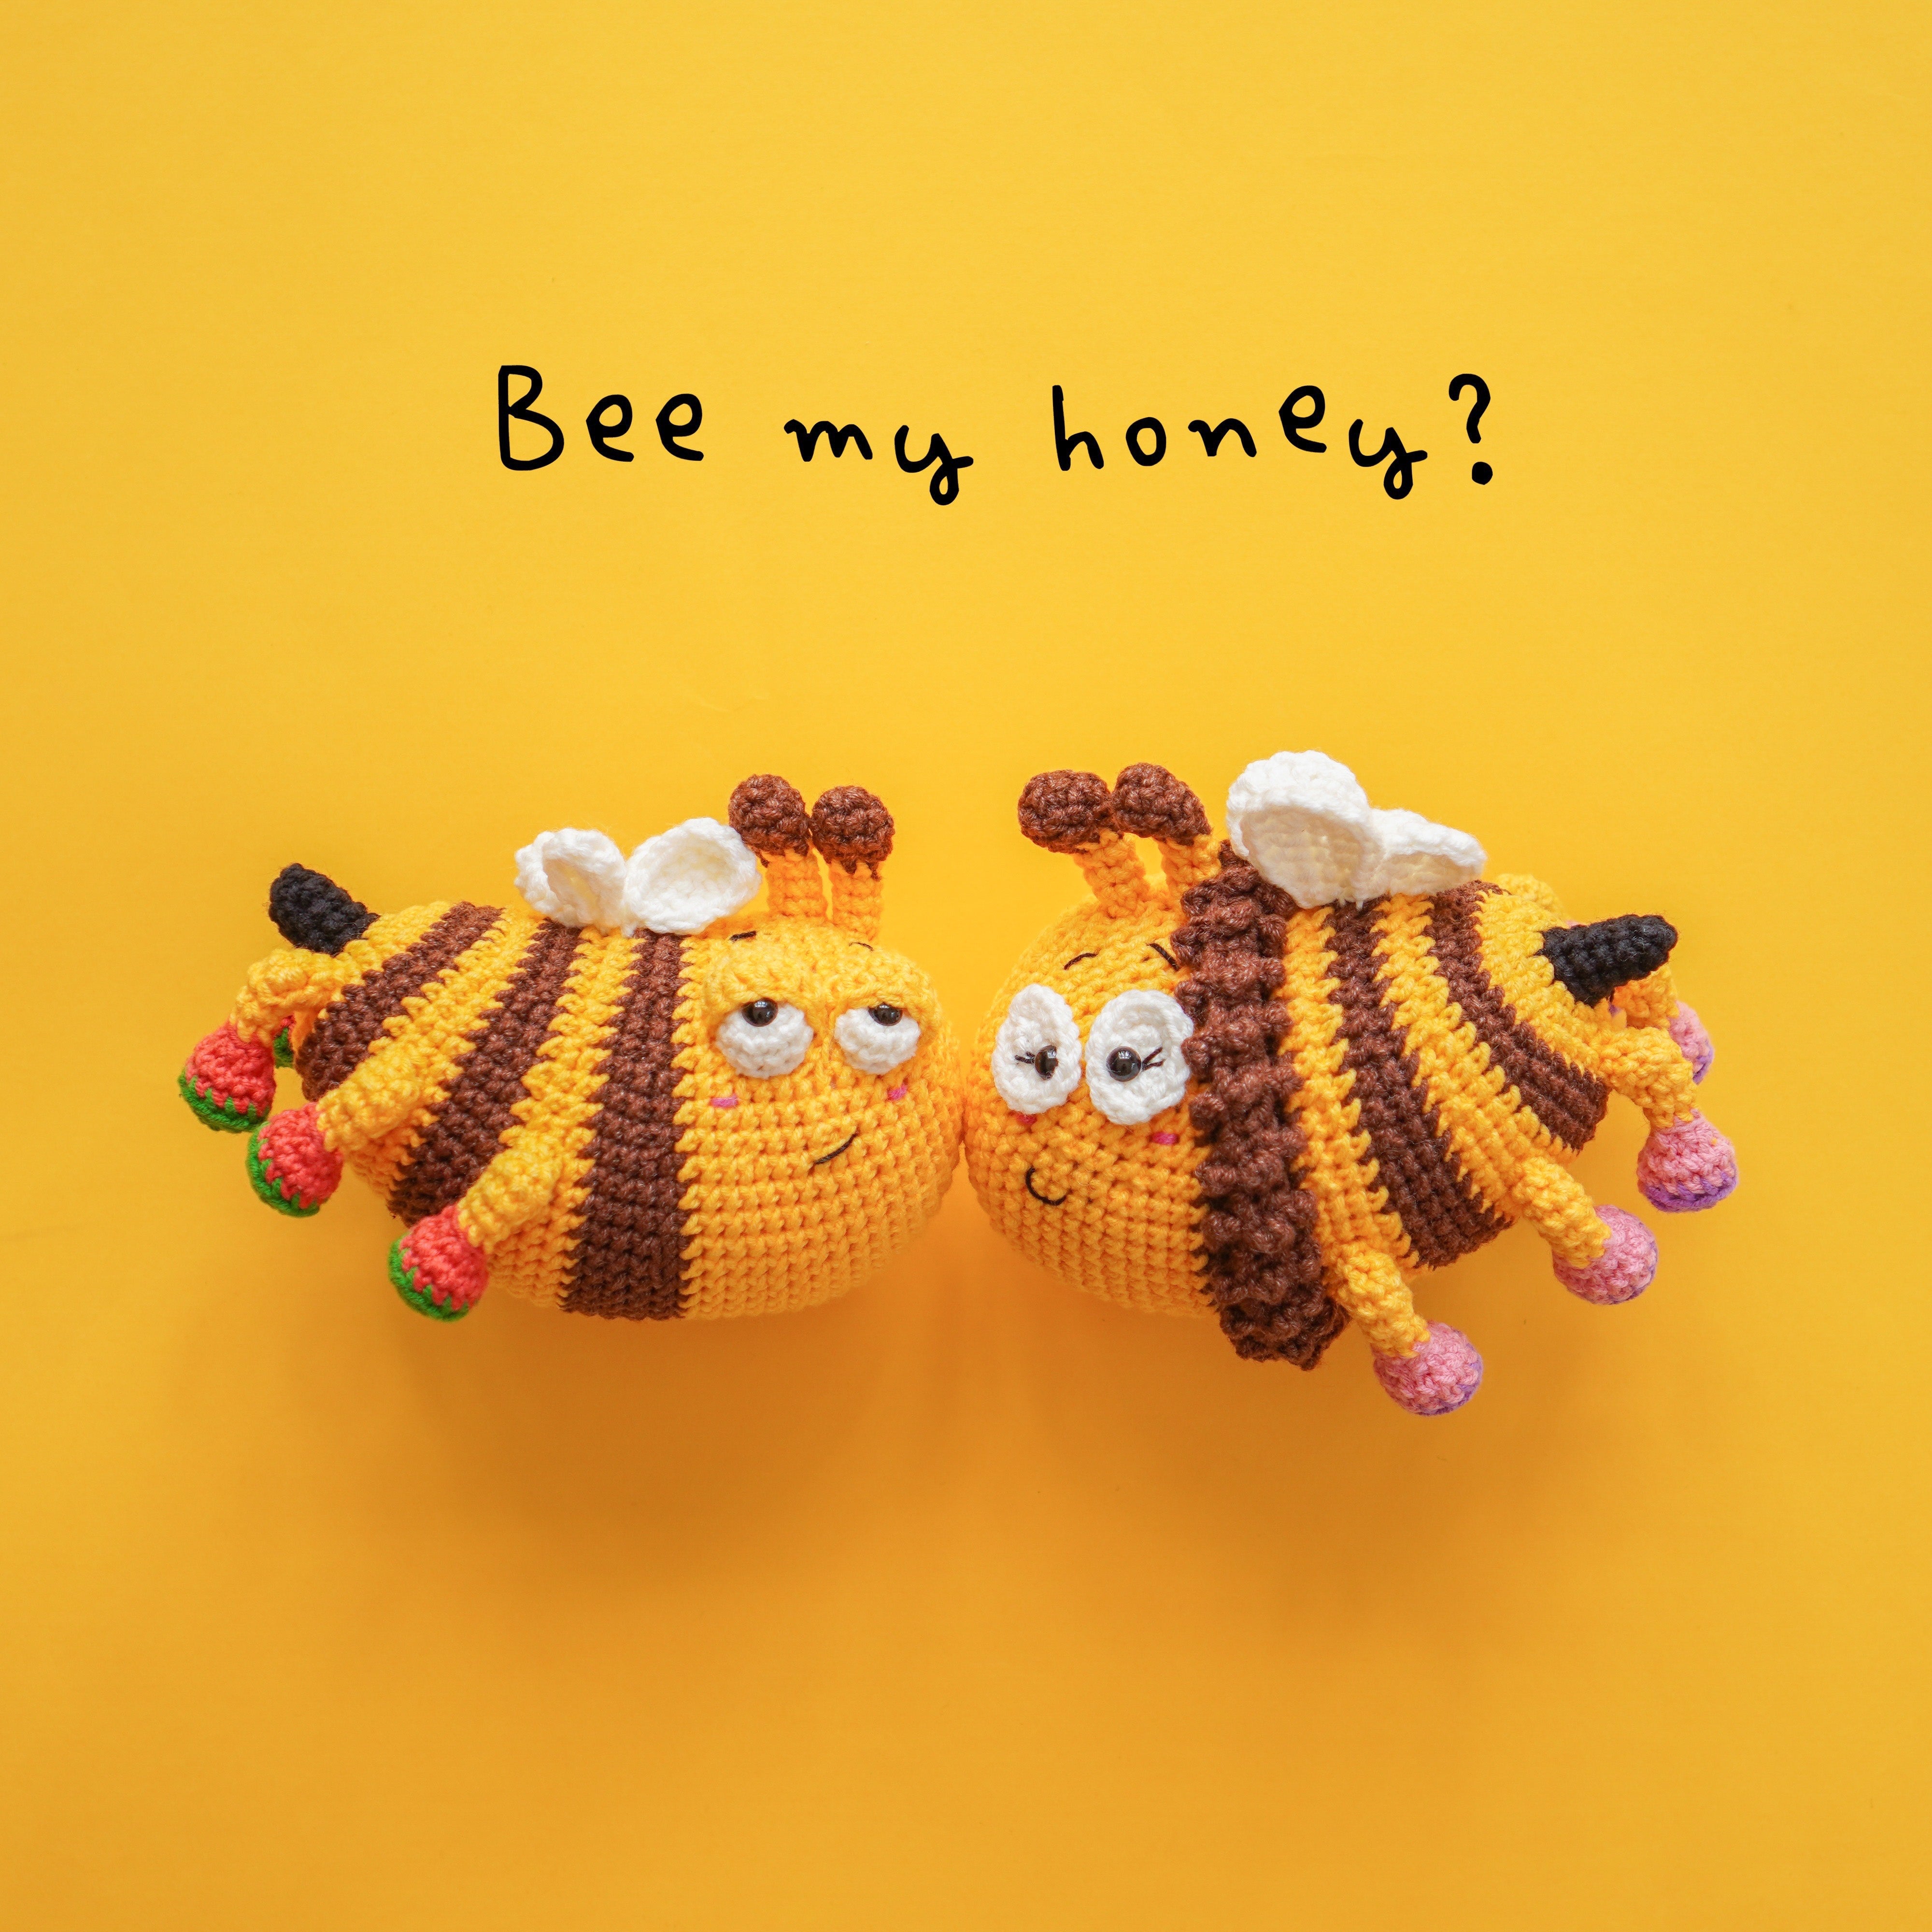 Cutie Crawlies: Bundle 11 Characters Crochet Pattern by Aquariwool Crochet (Crochet Doll Pattern/Amigurumi Pattern for Baby gift)